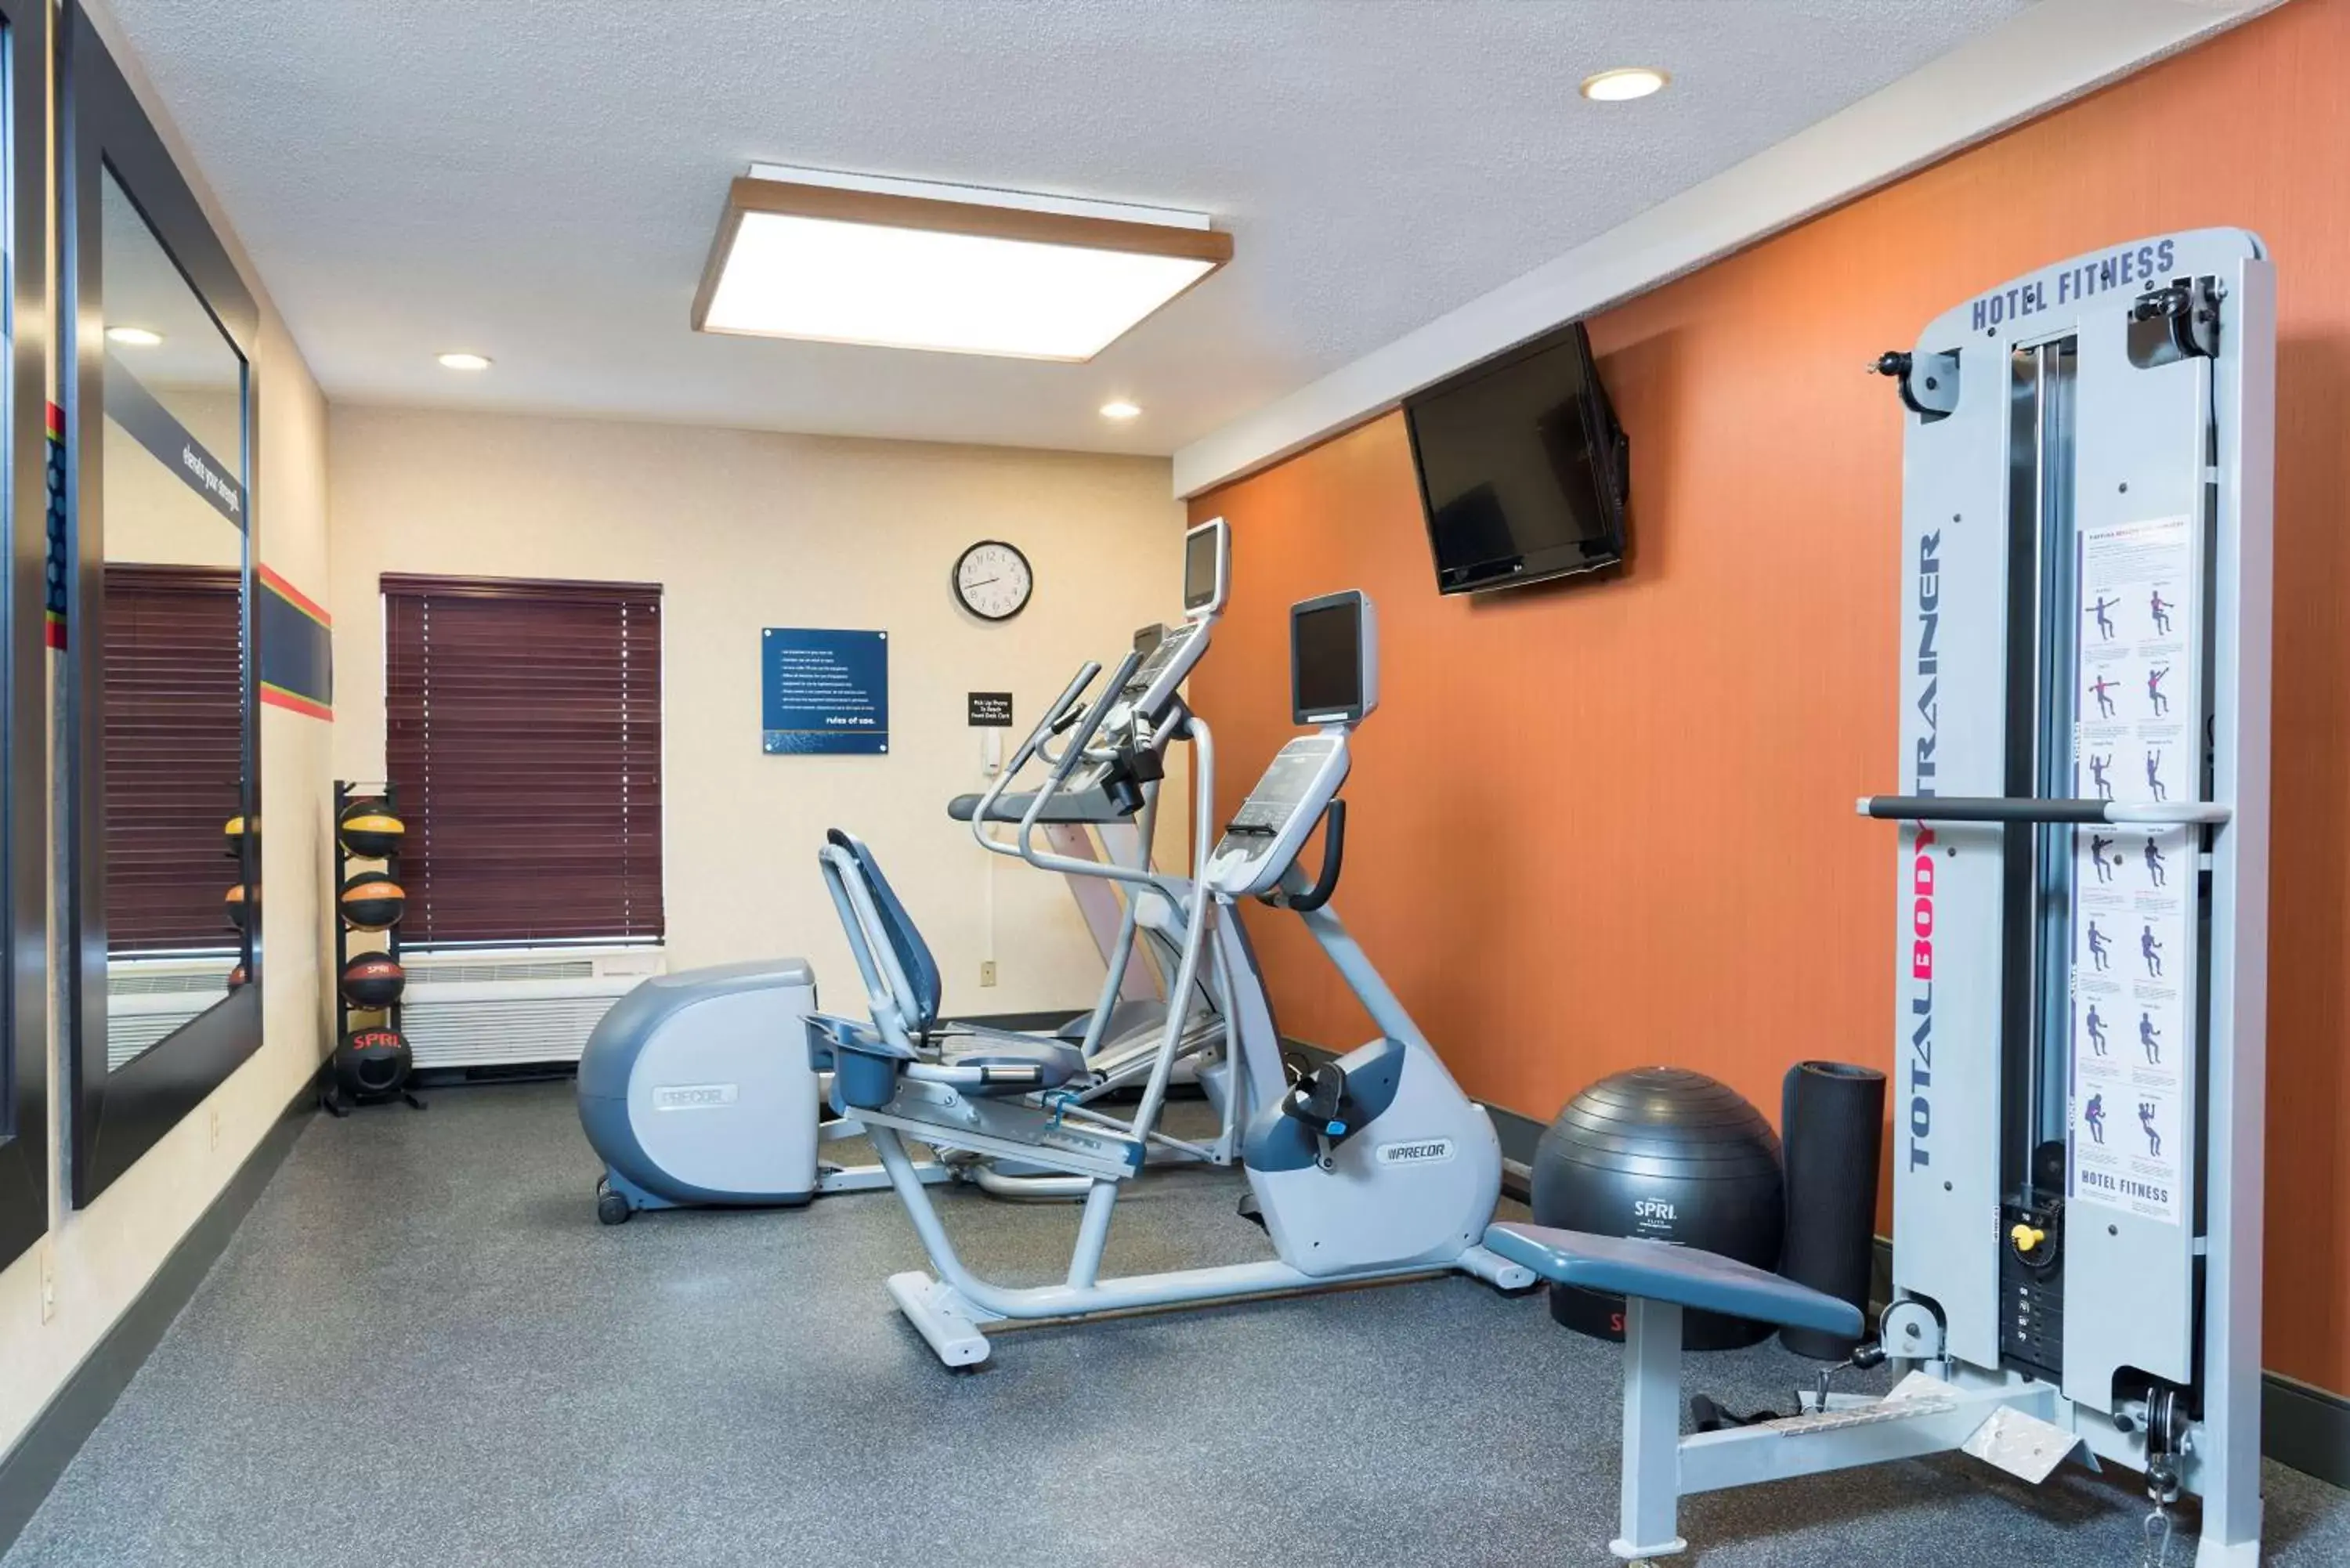 Fitness centre/facilities, Fitness Center/Facilities in Hampton Inn Port Huron